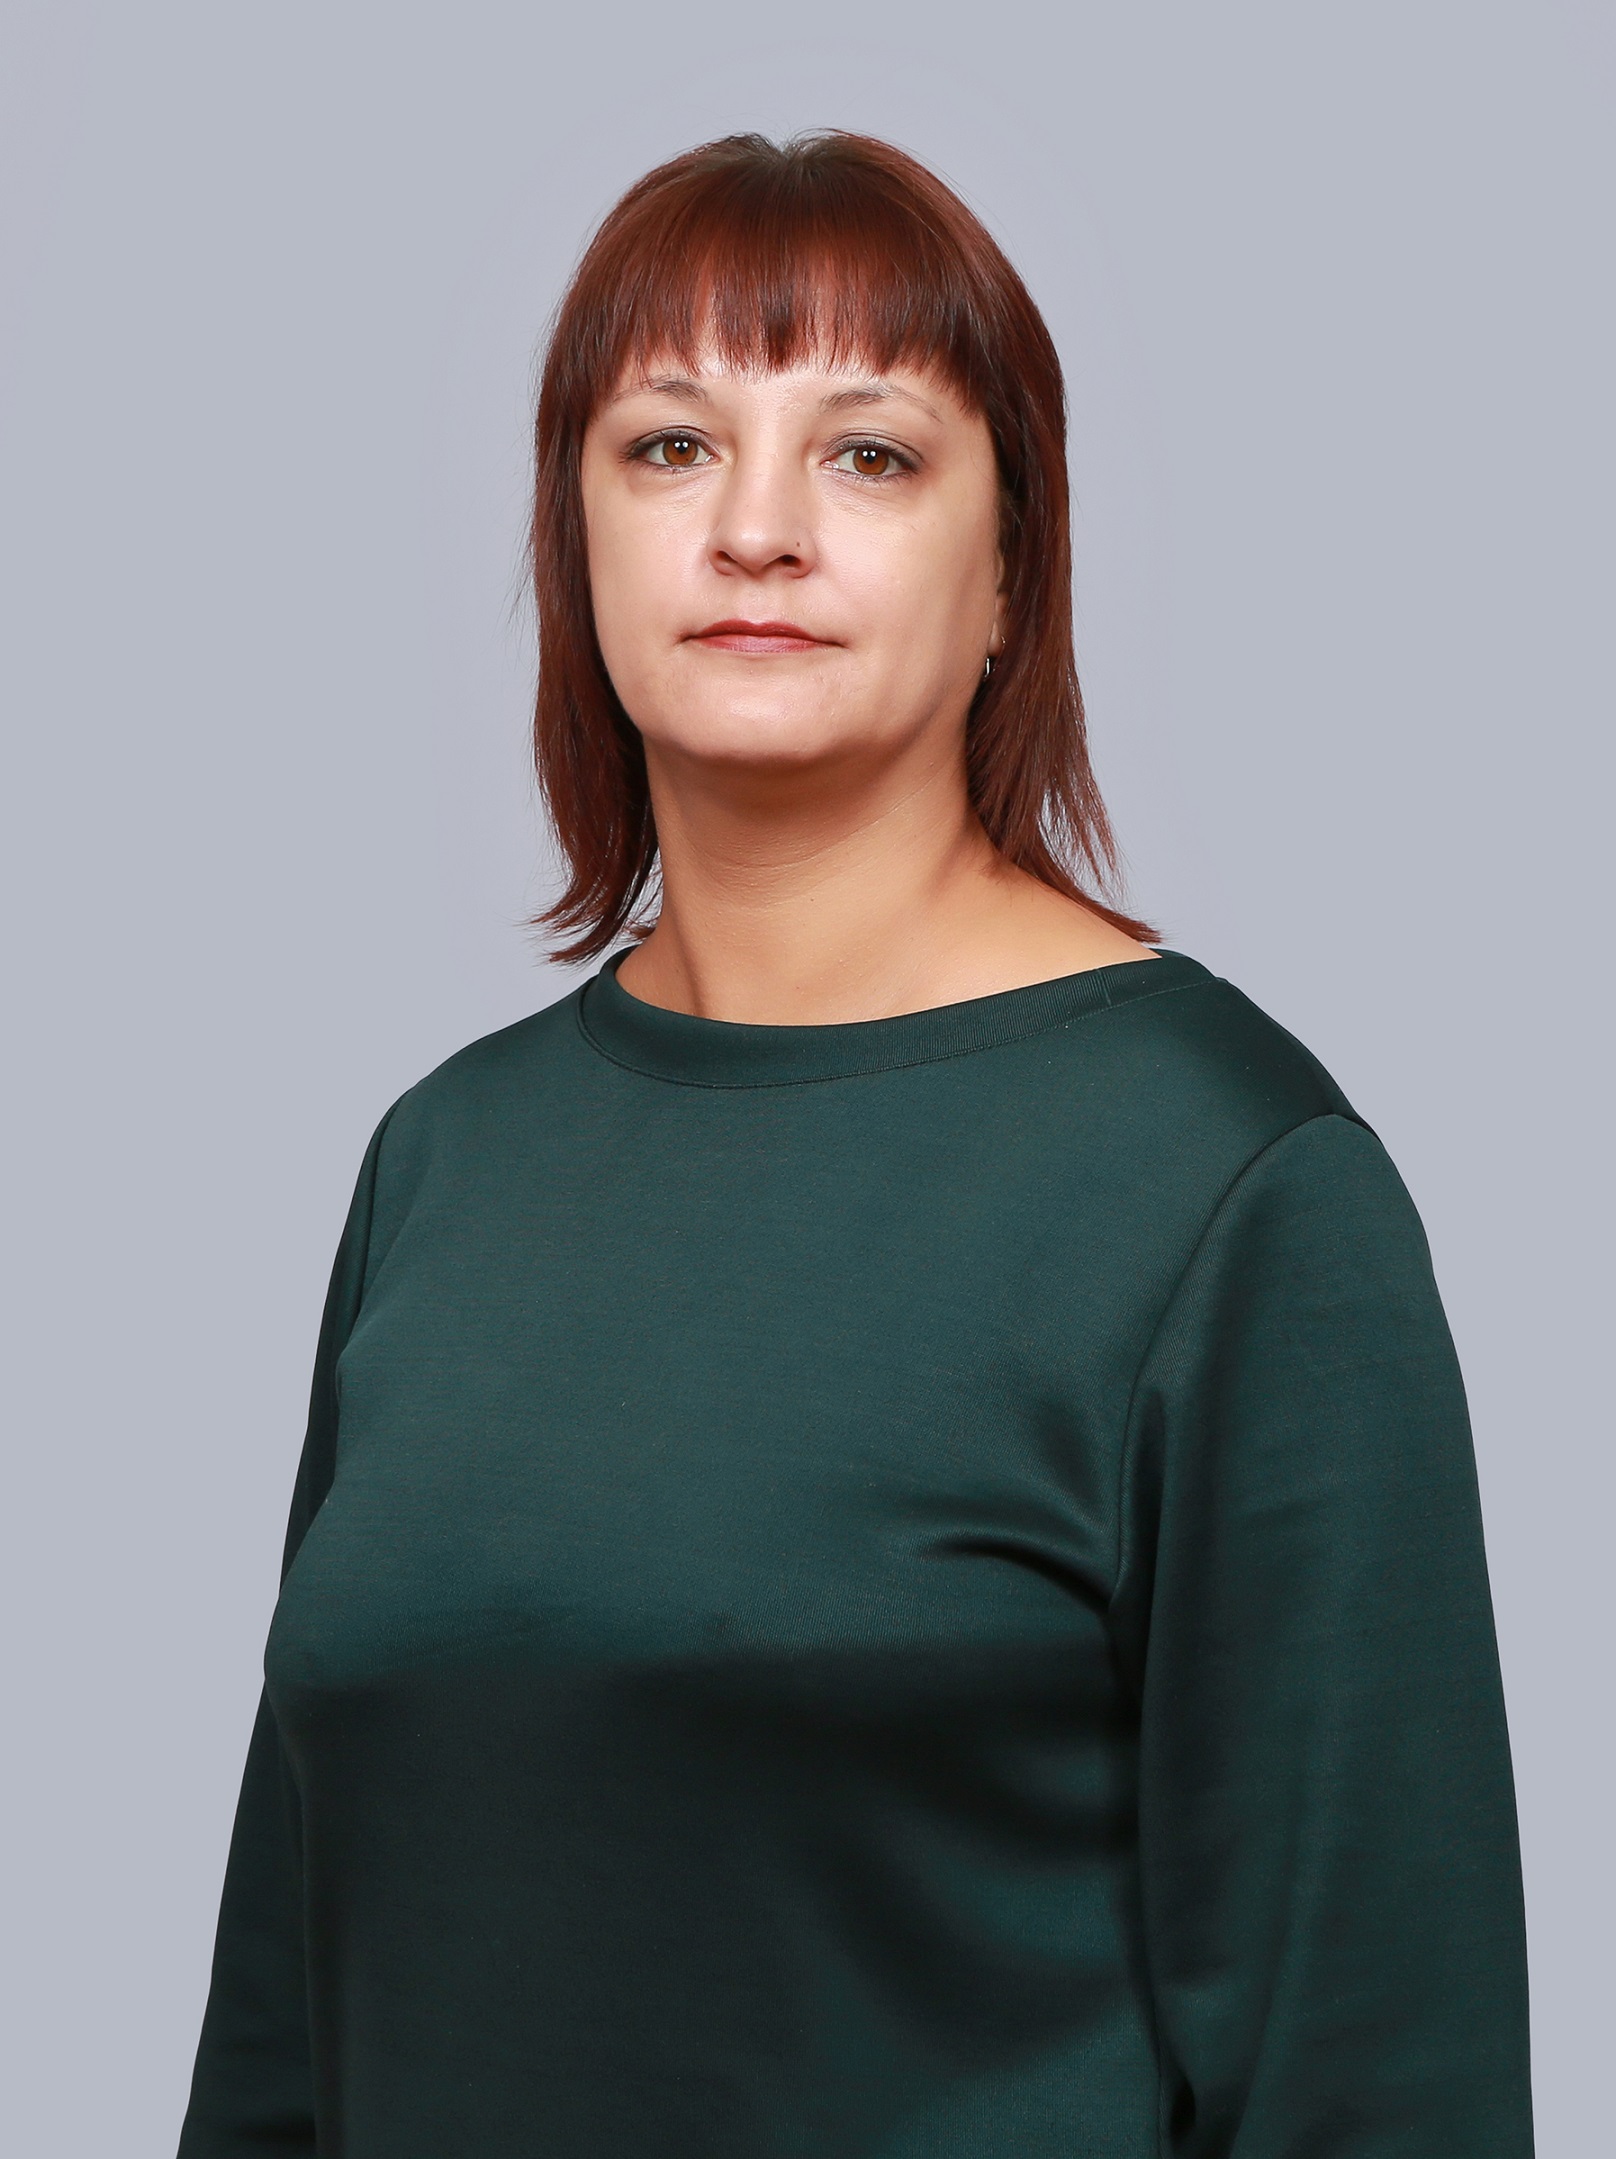 Казакова Ольга Александровна.